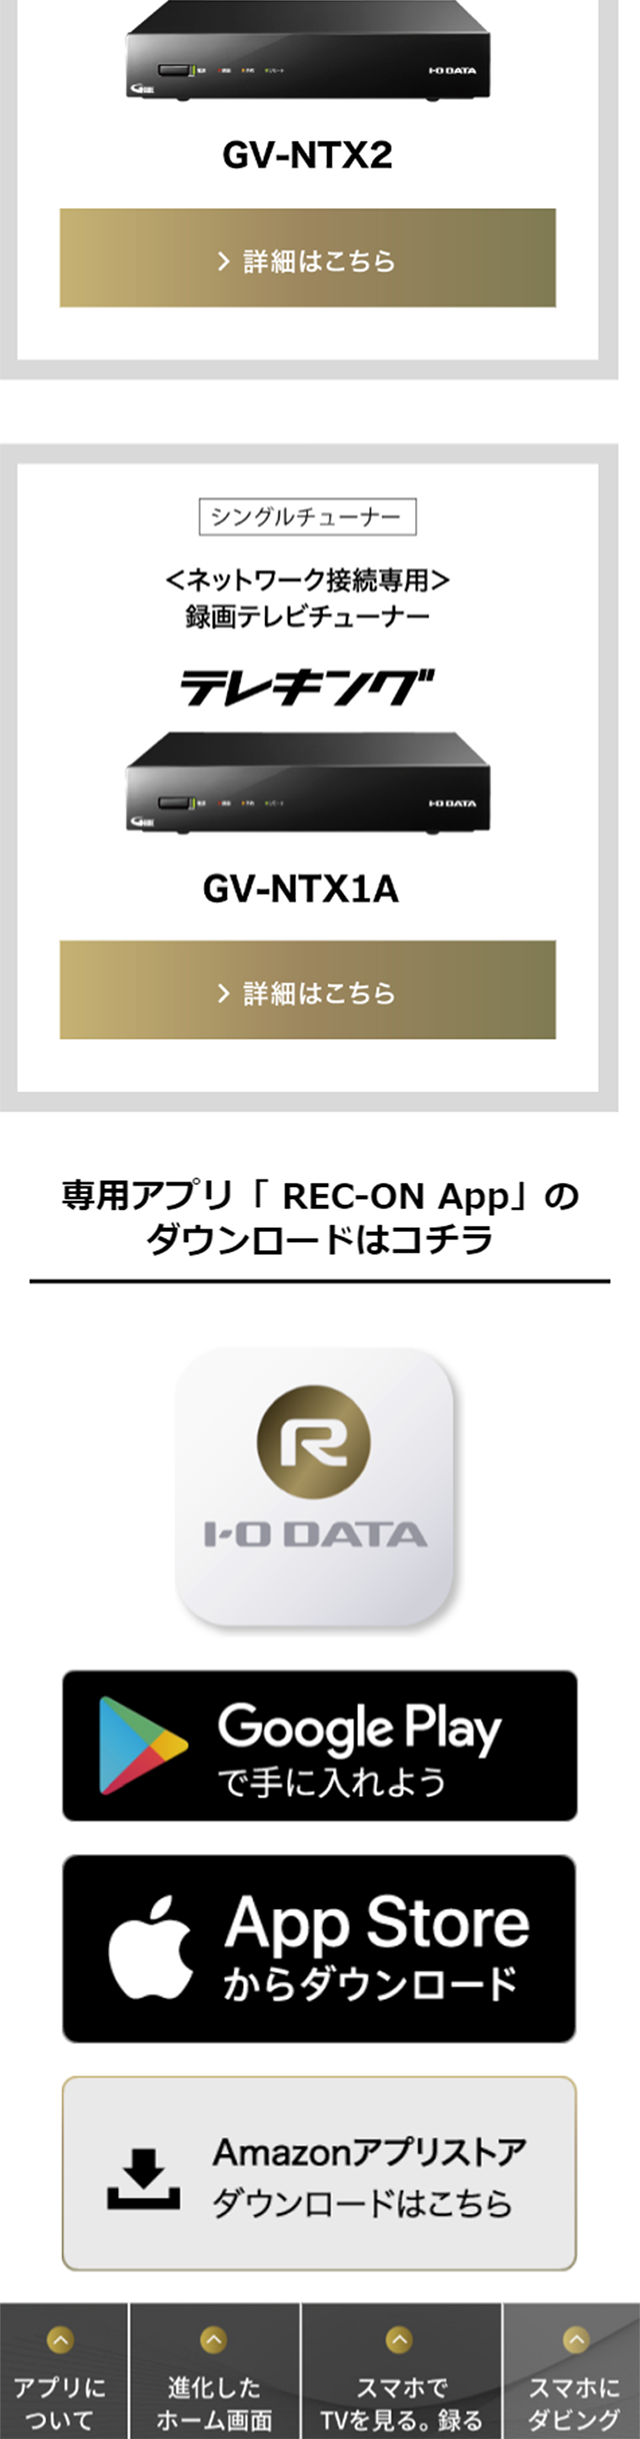 REC-ON App_sp_2